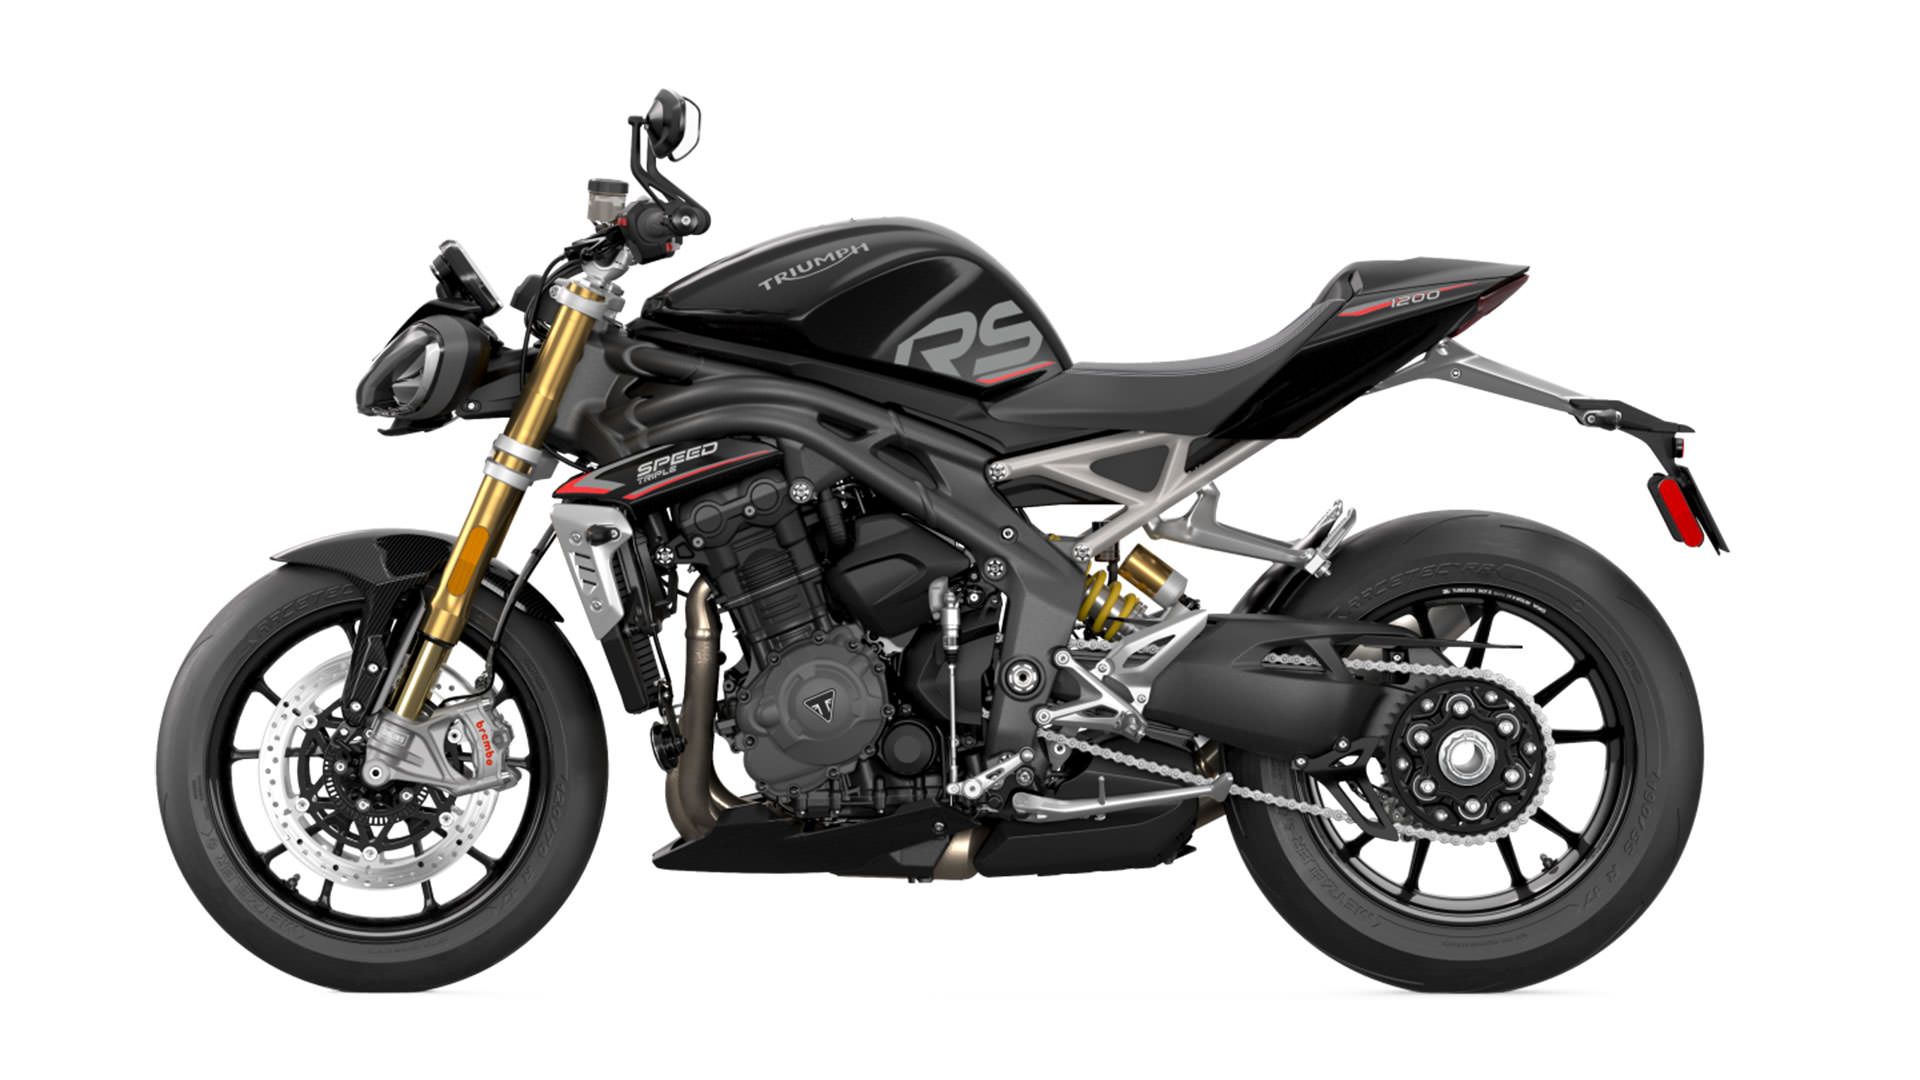 نمای جانبی موتورسیکلت تریومف اسپید تریپل 1200 آر اس / Triumph Speed Triple 1200 RS 2021 Motorcycle سیاه رنگ